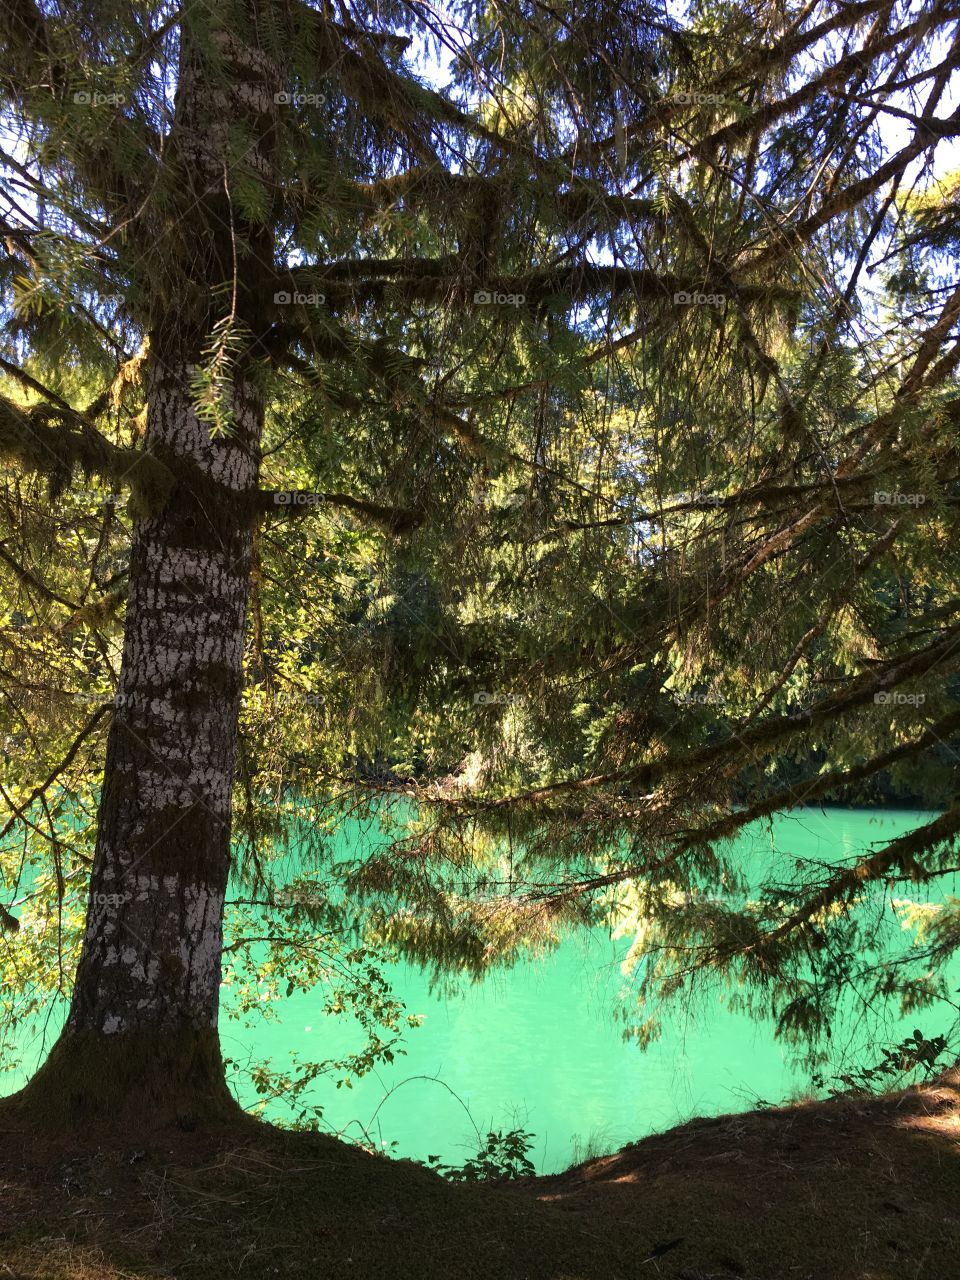 Baker Lake through the trees